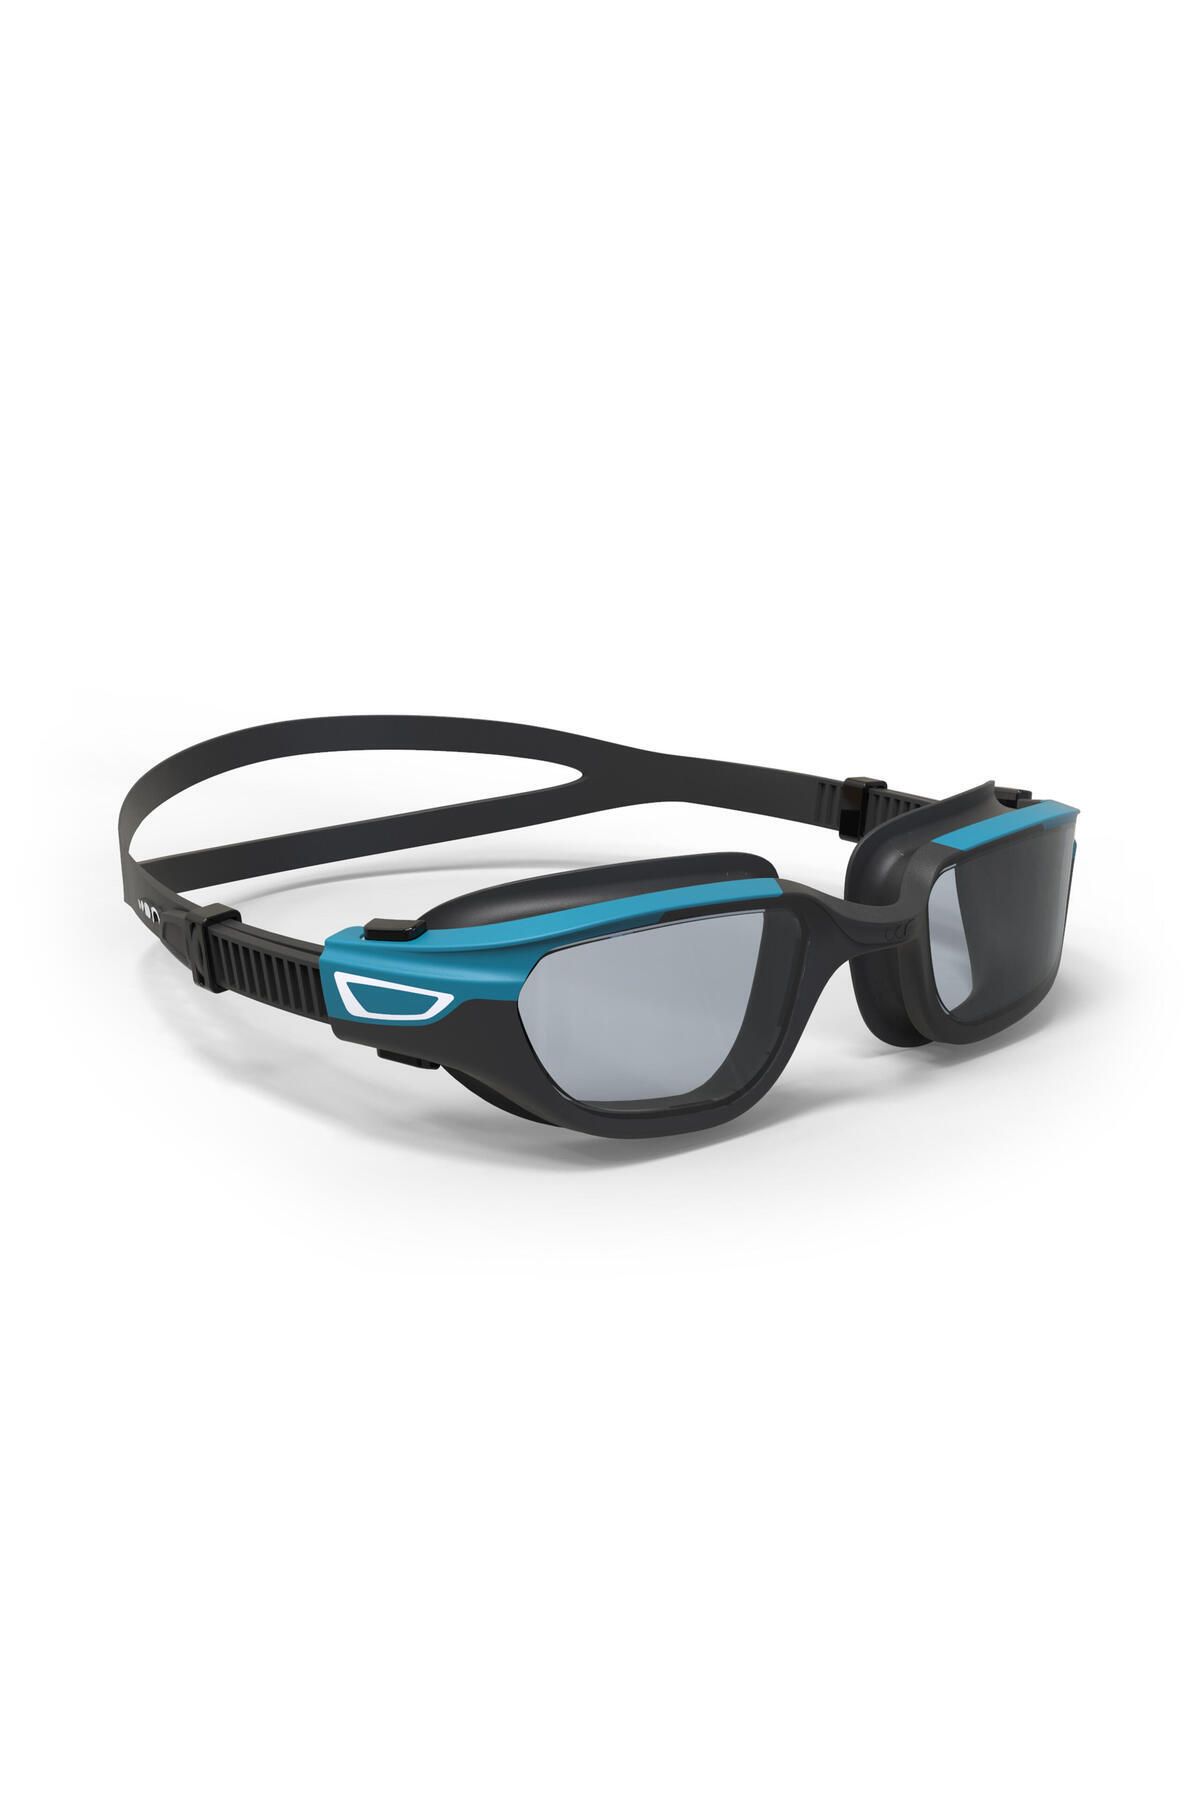 Decathlon Yüzücü Gözlüğü - Siyah / Mavi - Polarize Camlar - L Boy - Spirit